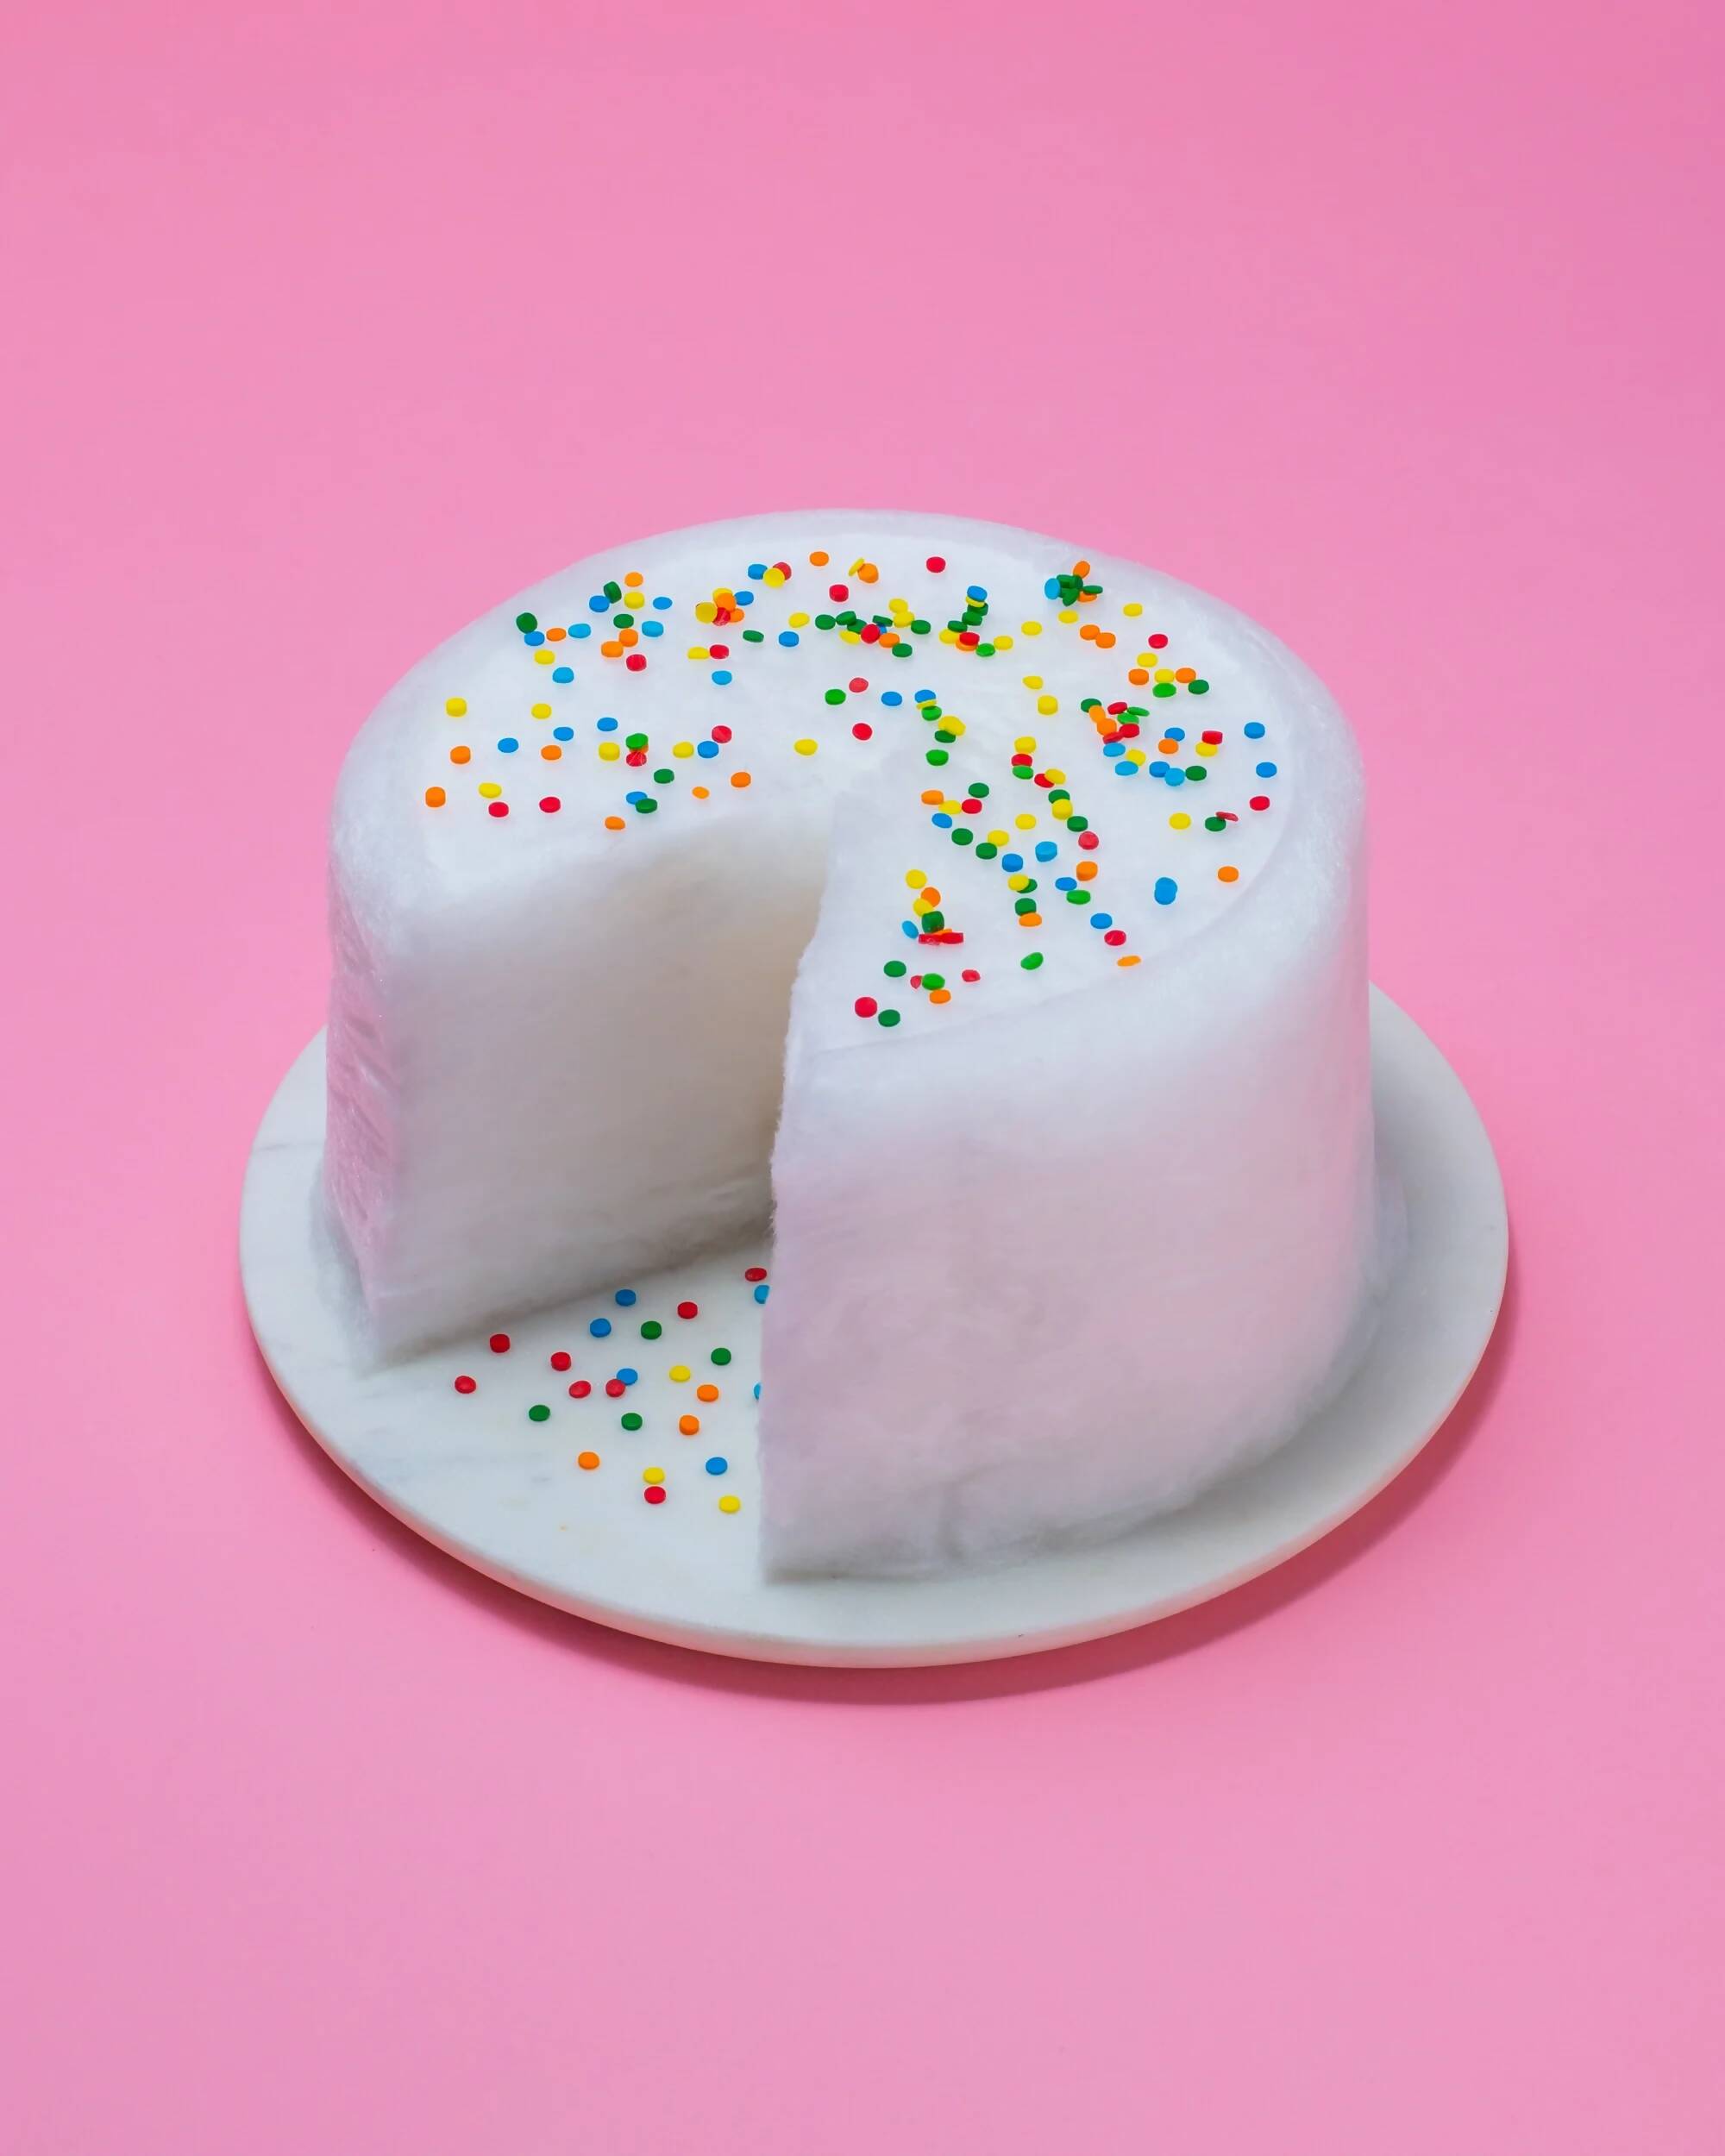 BIRTHDAY CAKE FLOOF CAKE - 0